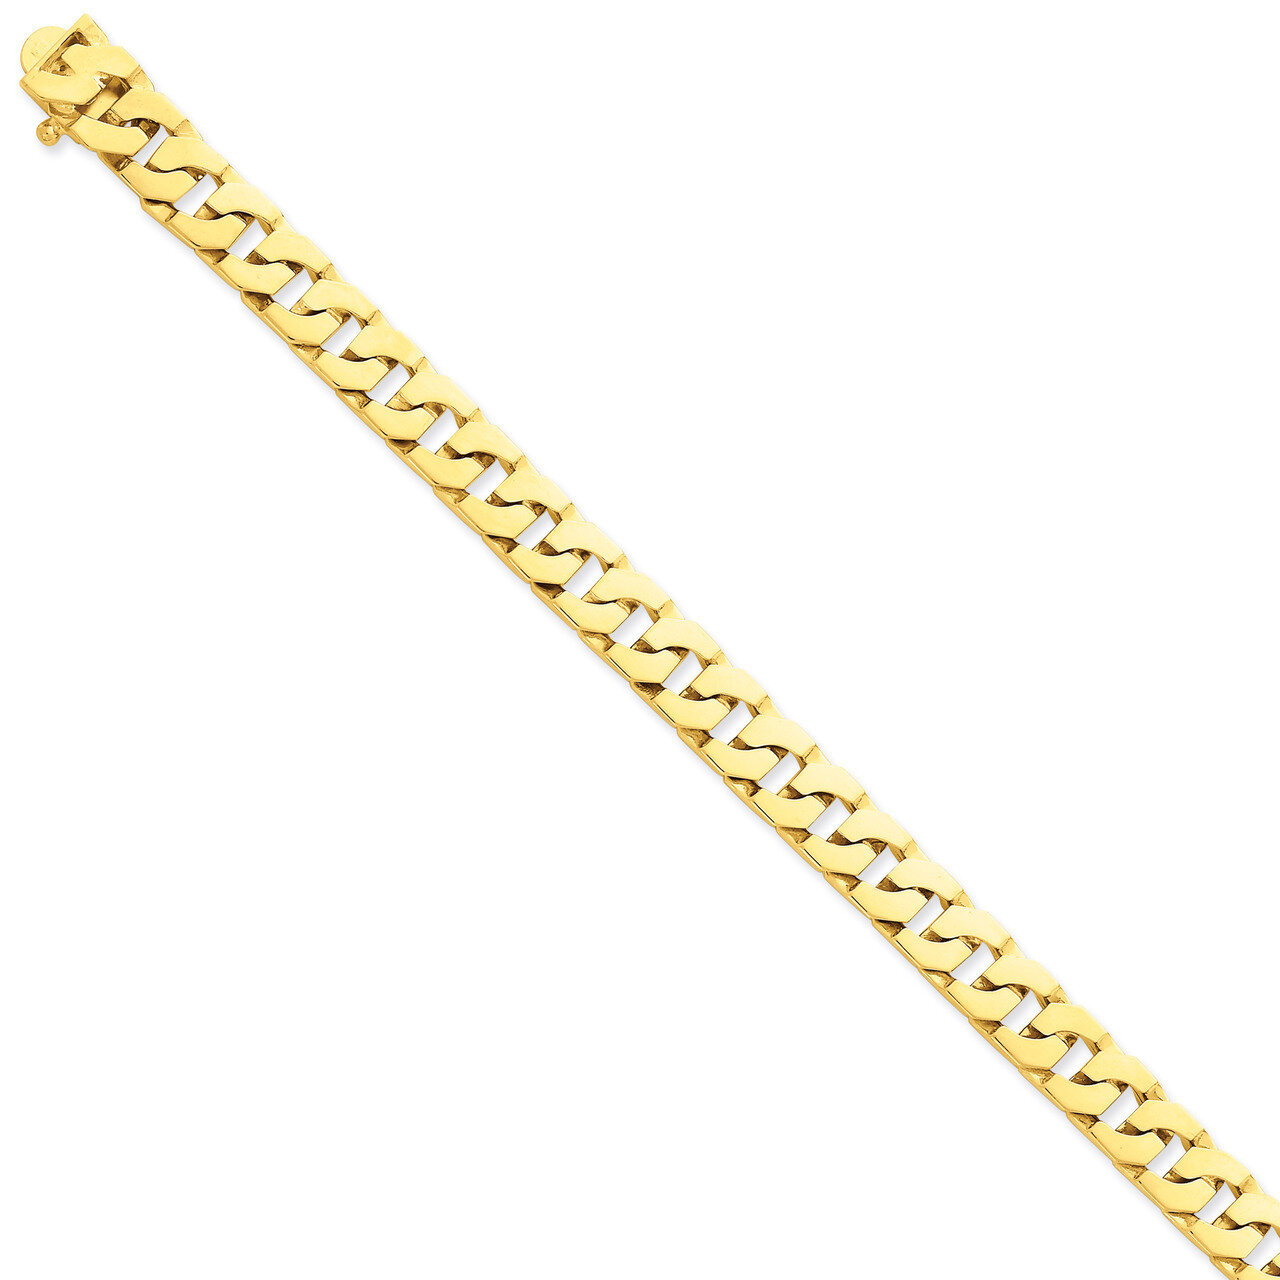 10mm Hand-polished Fancy Link Chain 8 Inch 14k Gold LK138-8